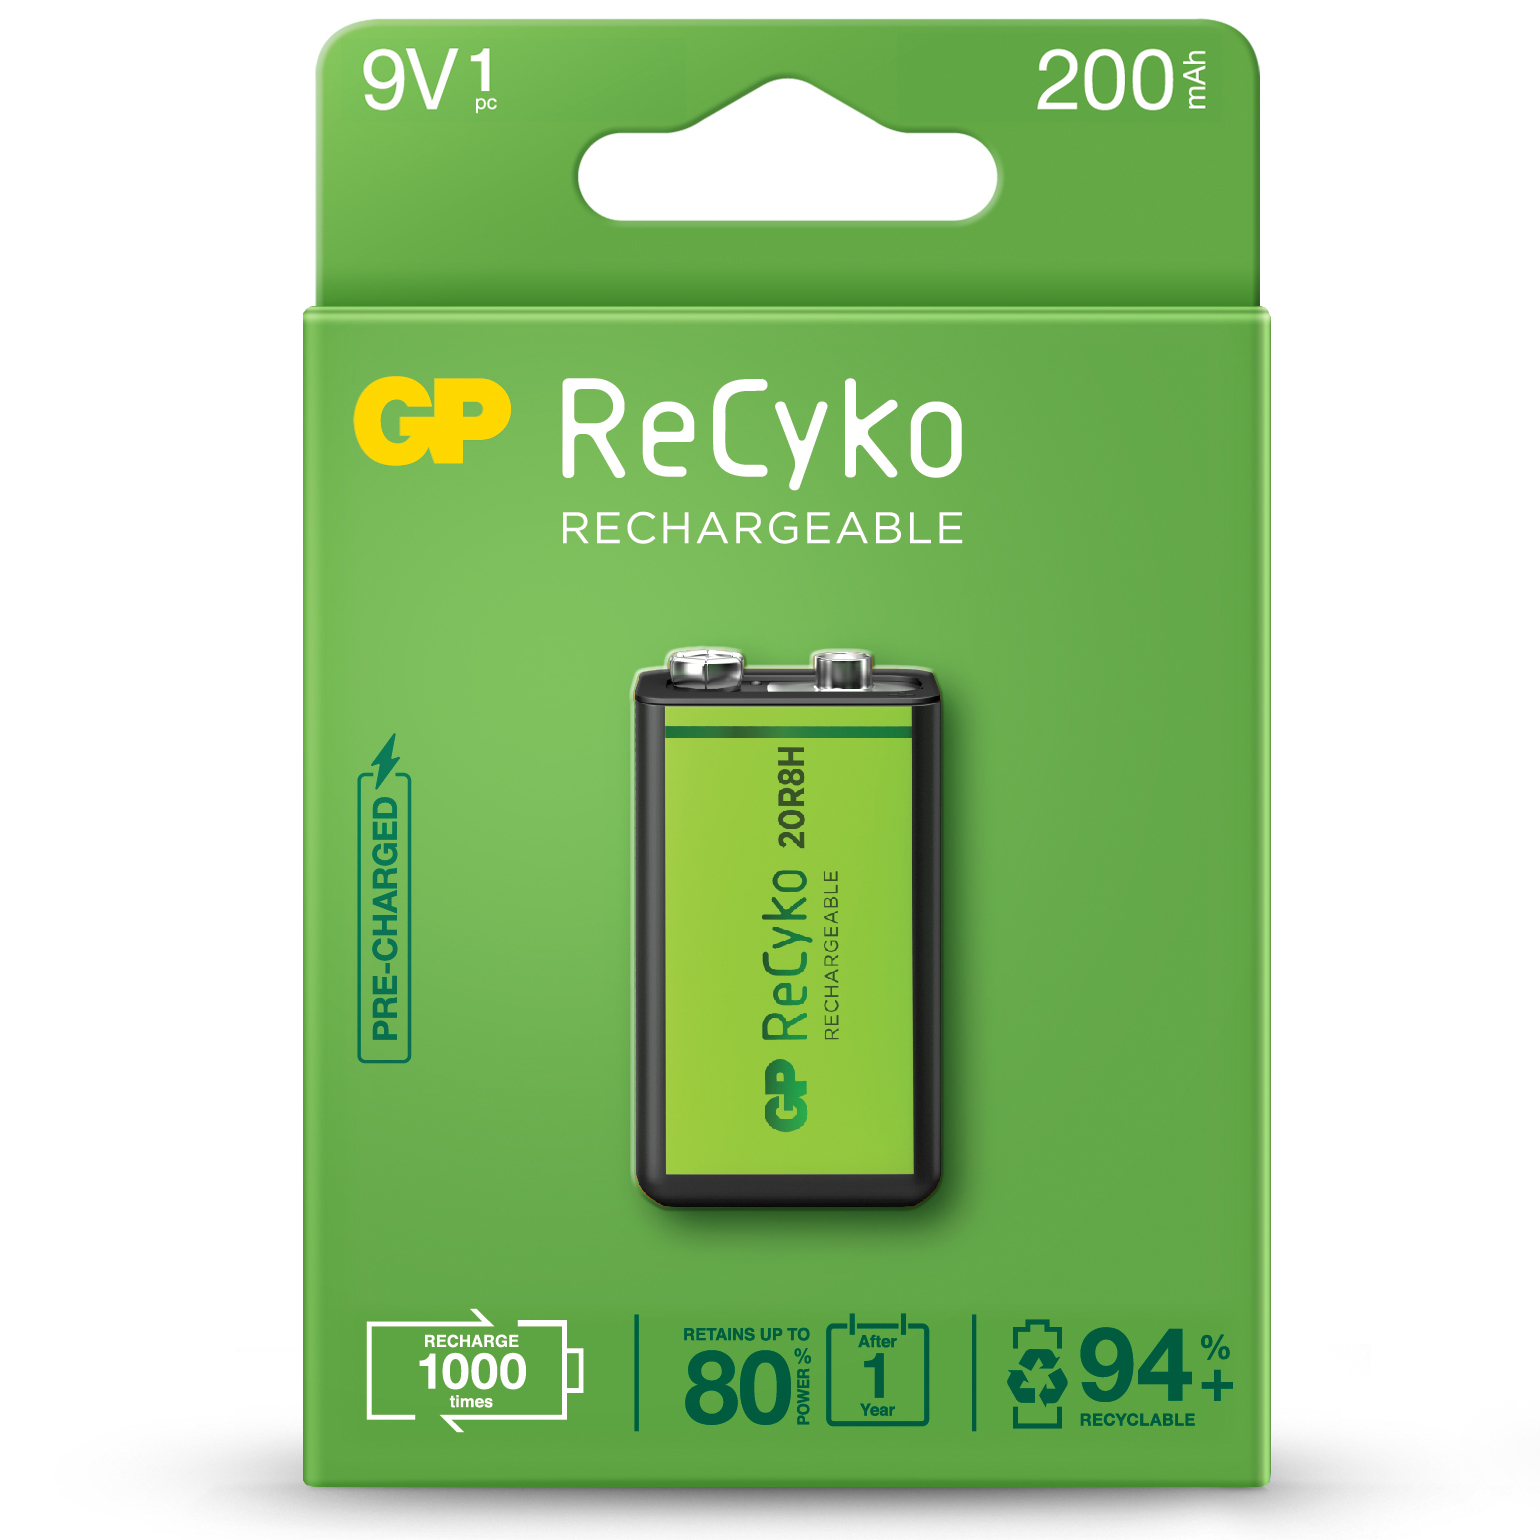 9V, LR09 ReCyko rechargeable 200mAh - Blister 1u.